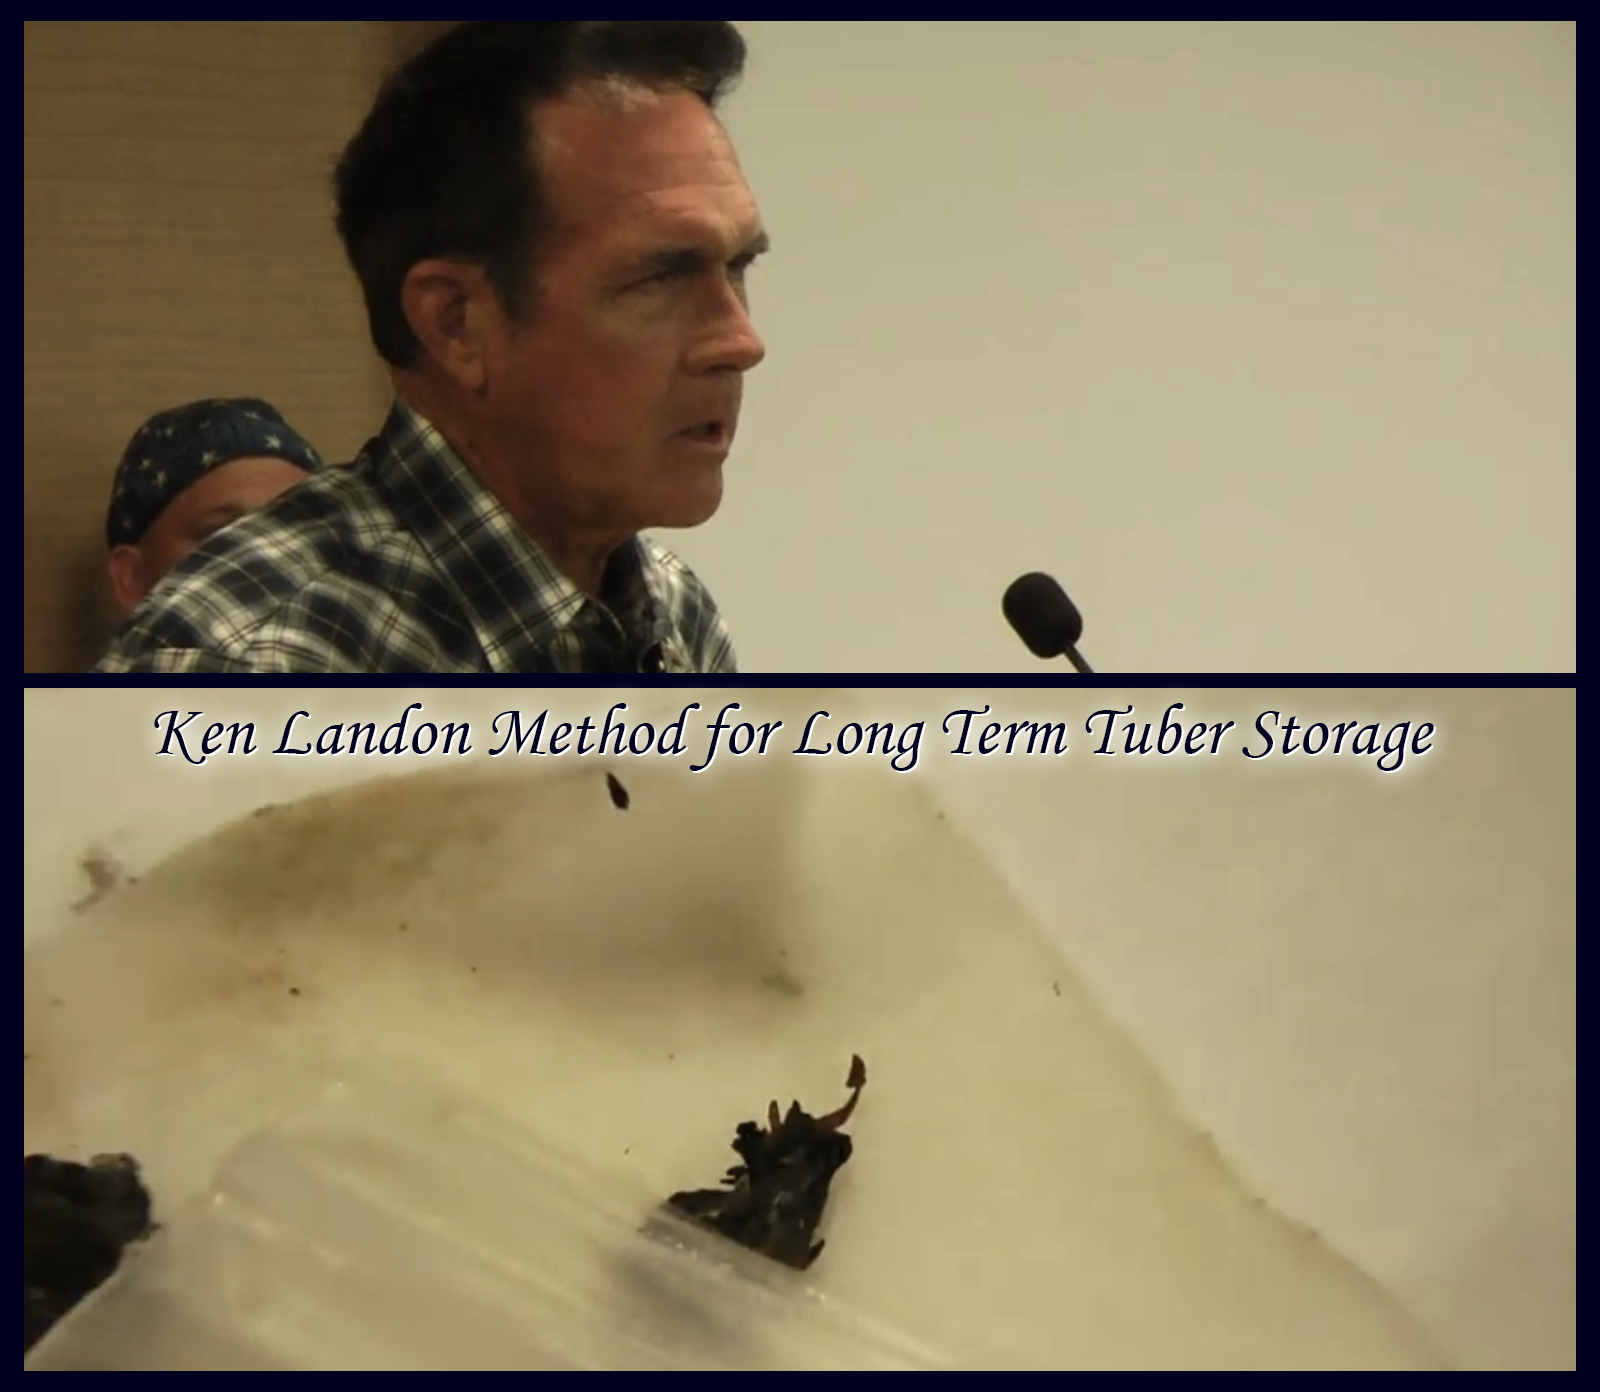 Ken Landon Method for Long Term Tuber Storage